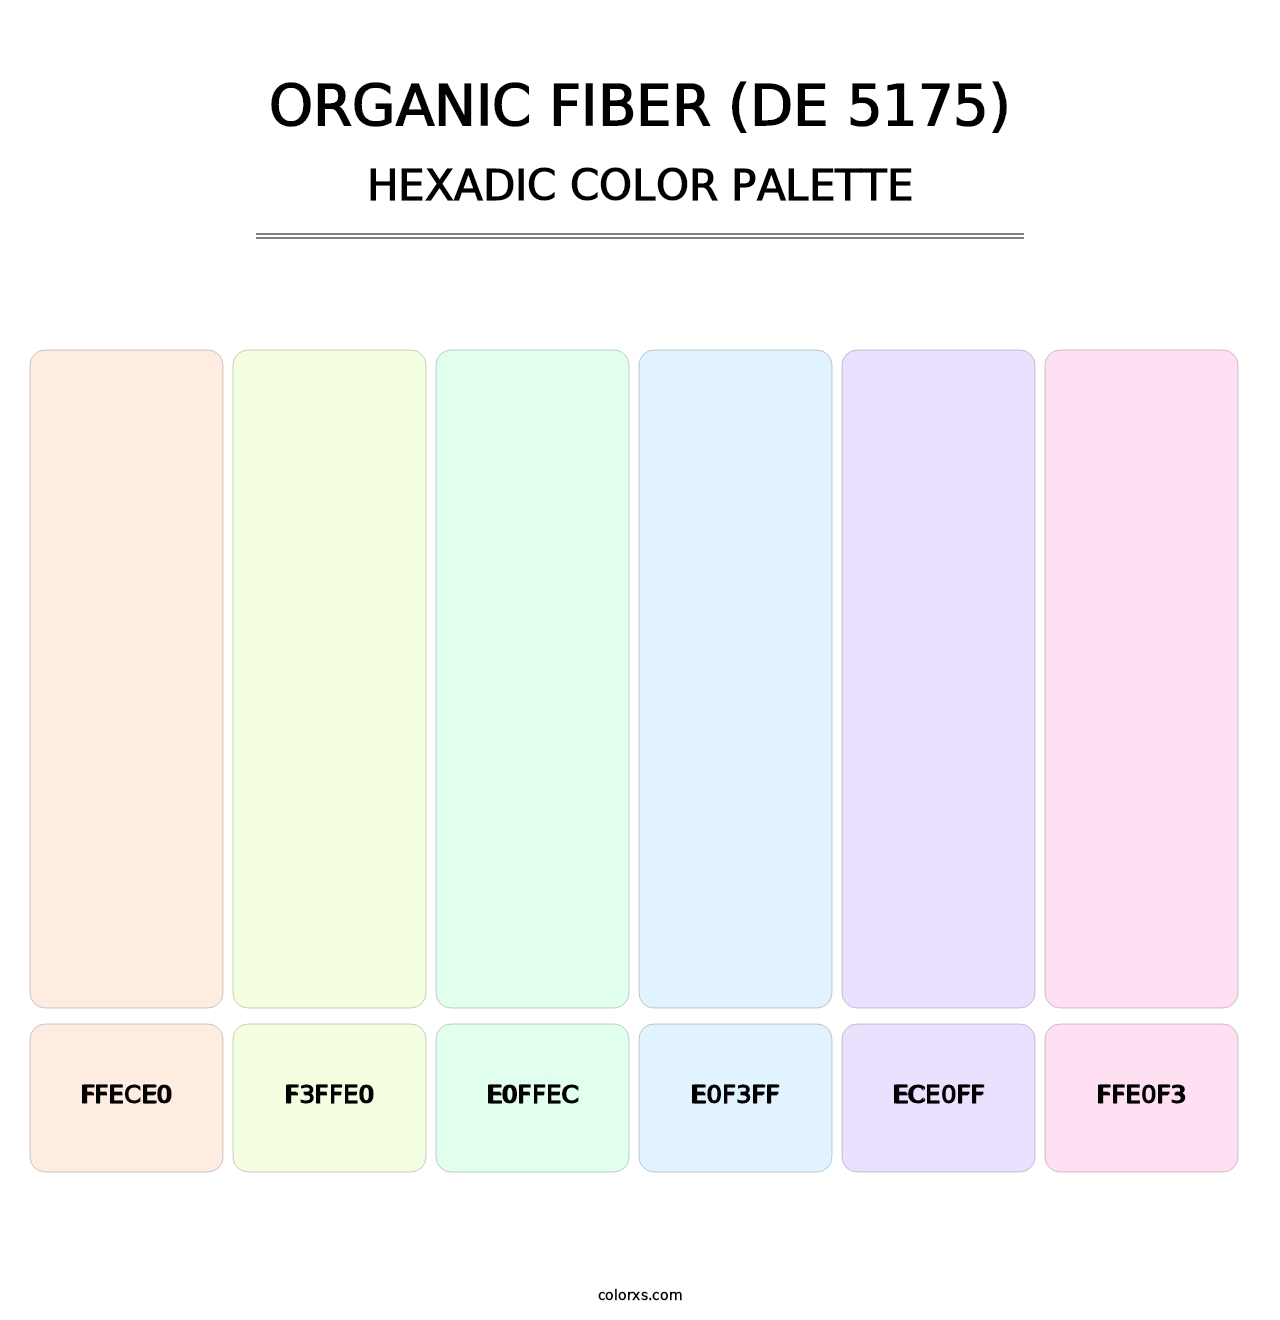 Organic Fiber (DE 5175) - Hexadic Color Palette